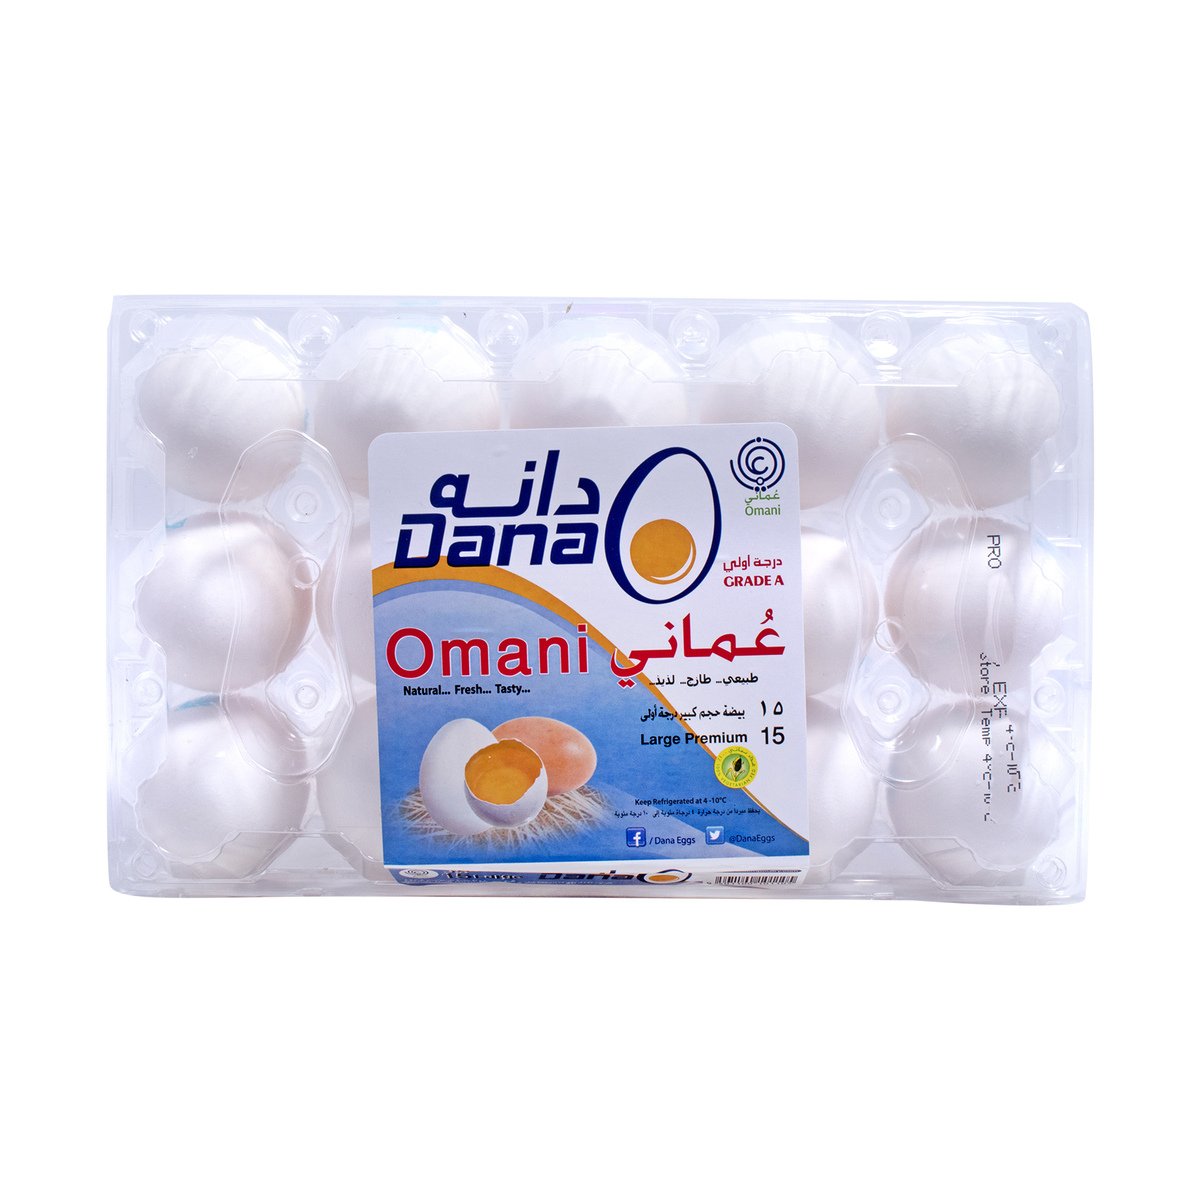 Dana Omani White/Brown Eggs Large 15pcs